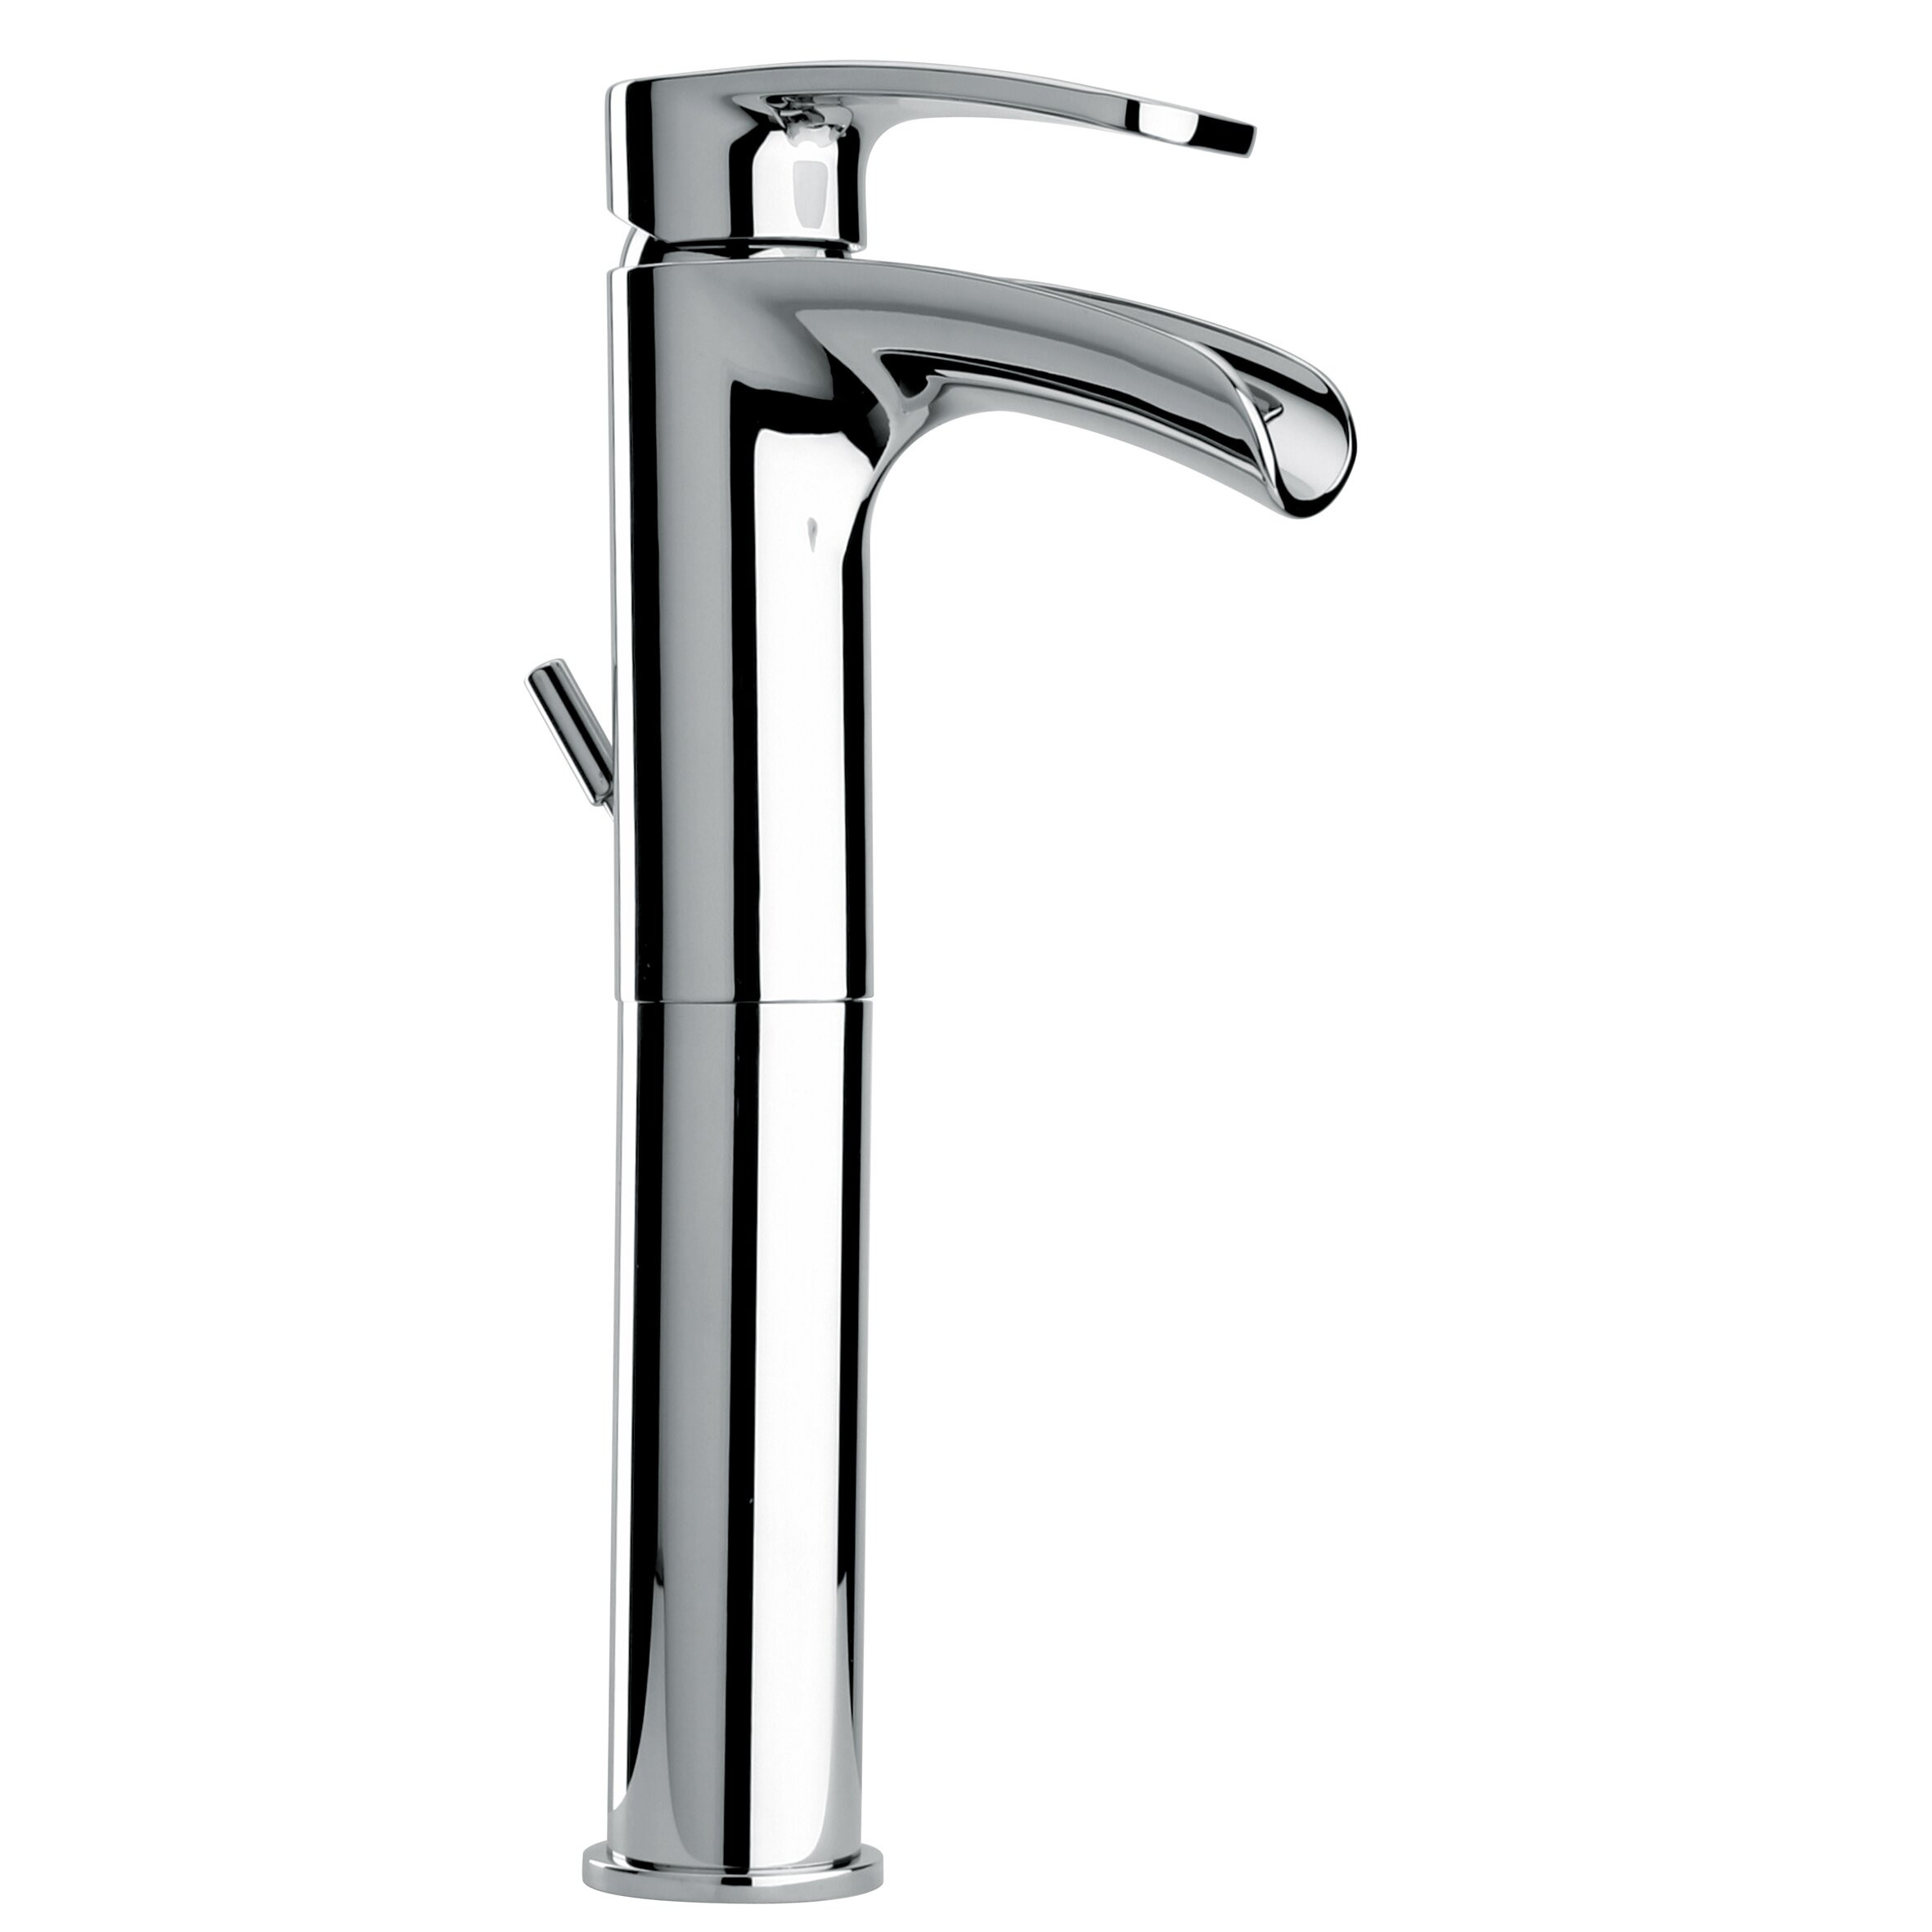 Bathroom Sinks And Faucets
 Jewel Faucets J10 Bath Series Single Loop Handle Tall